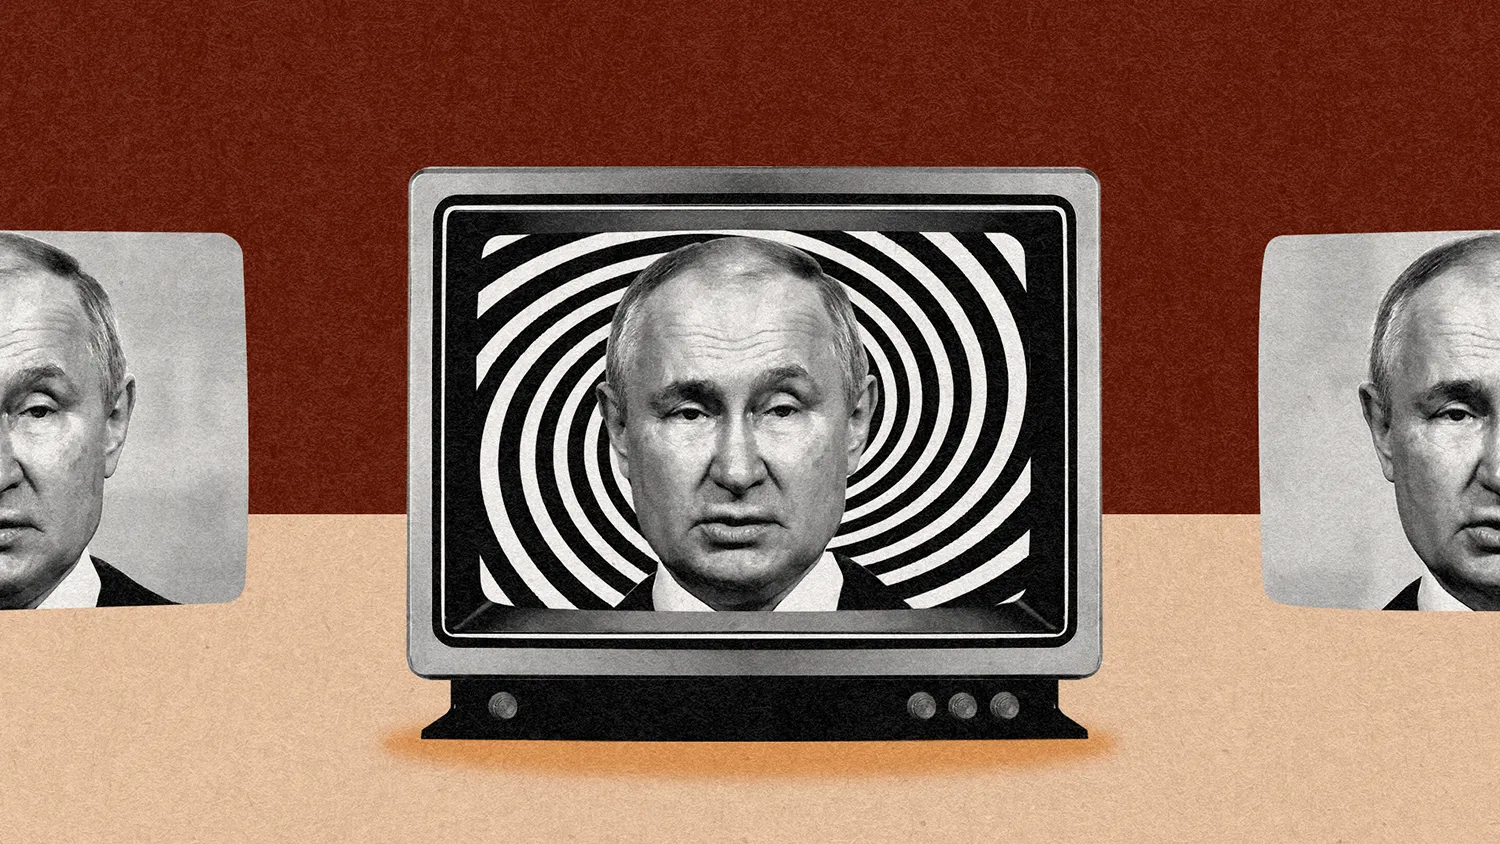 Putin-Russia-TV-propaganda-Mark-Harris-illustration.jpg